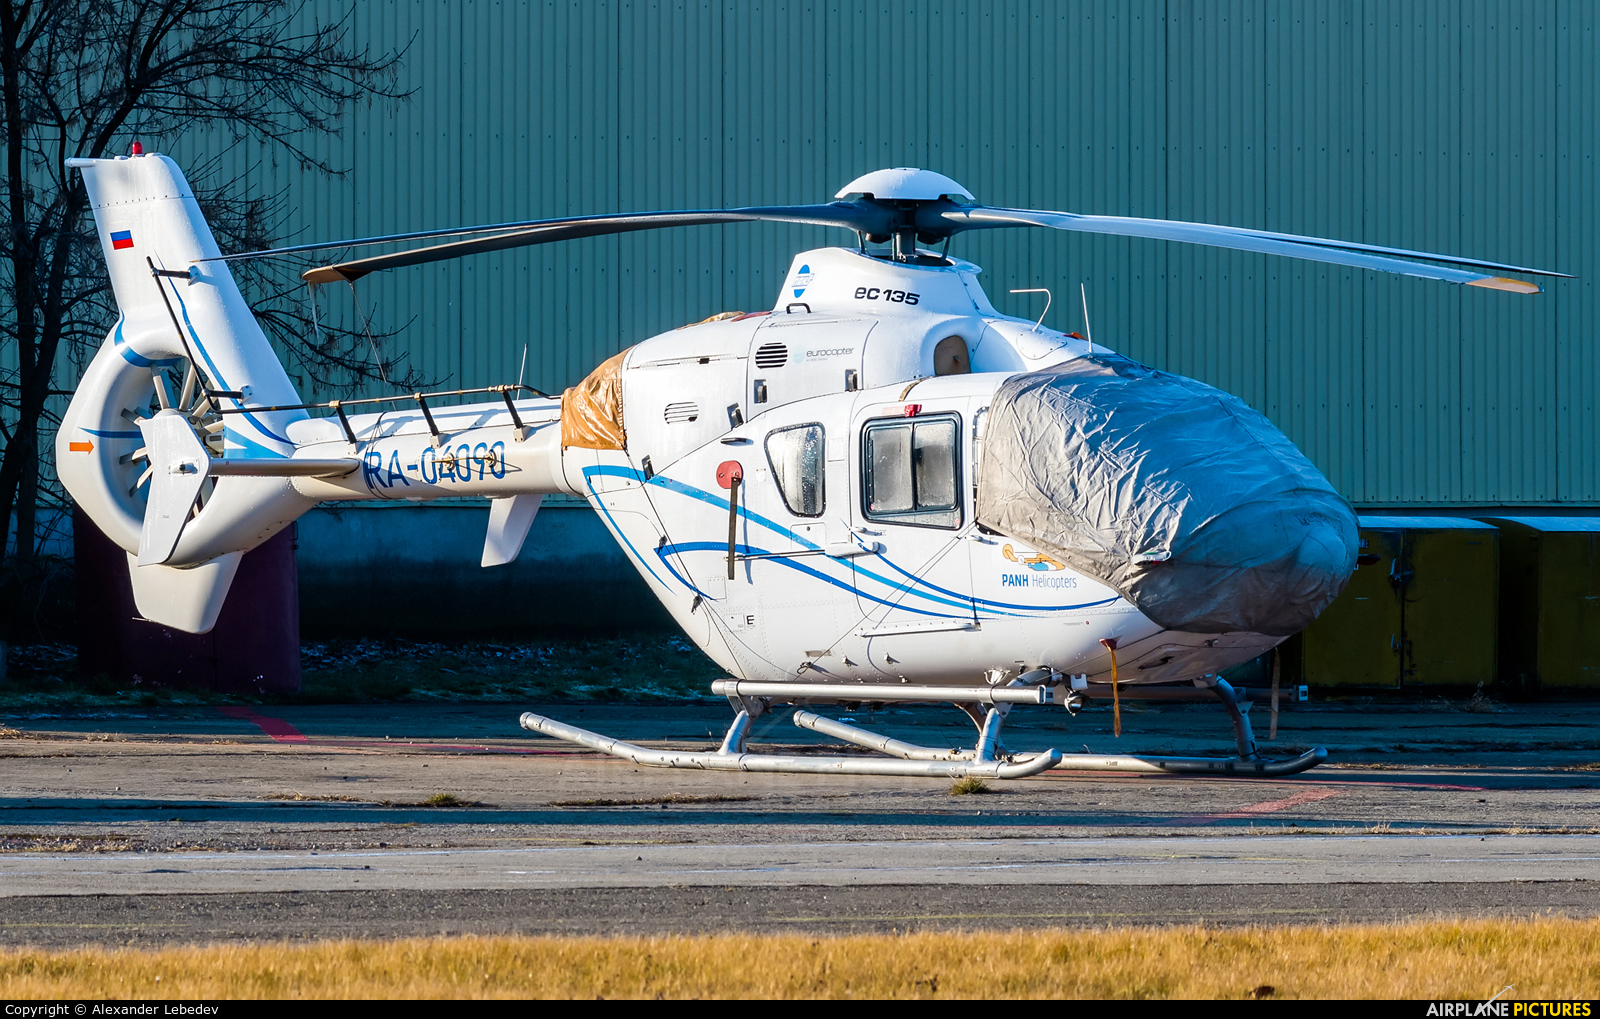 PANH Helicopters RA-04090 aircraft at Krasnodar